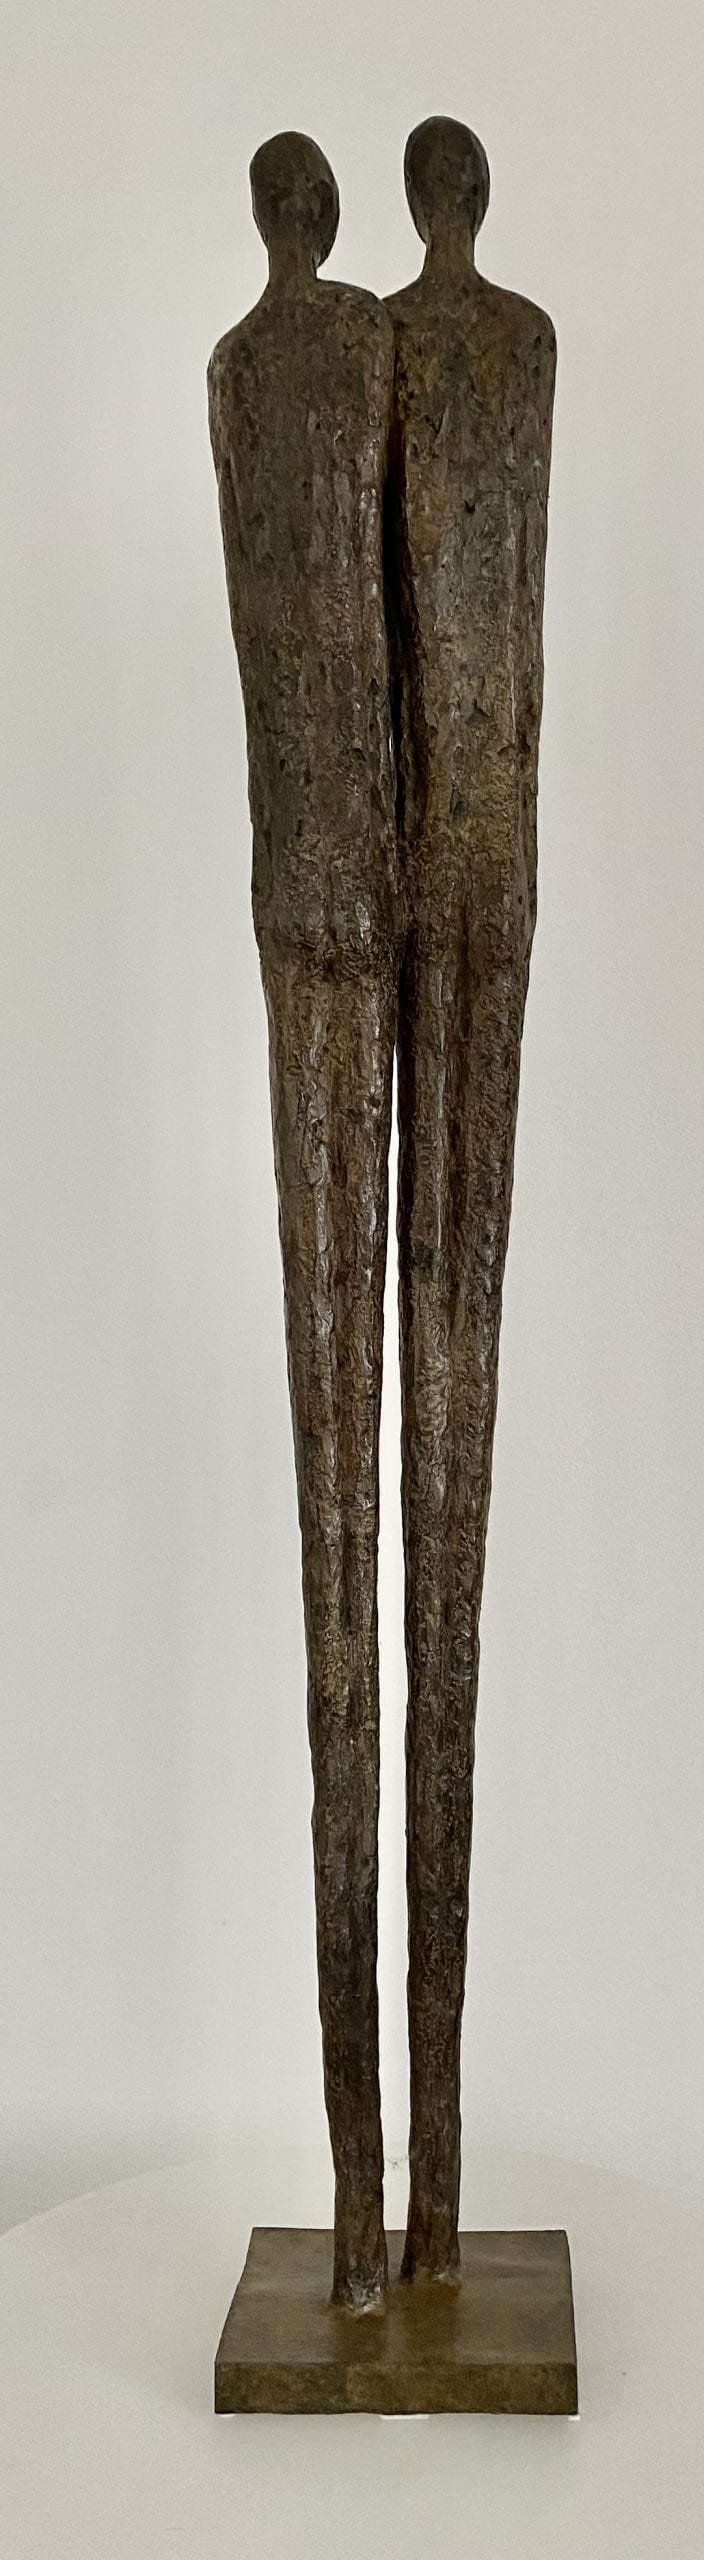 UN PLUS UN_Bronze_ 90cm / 35,4 inches